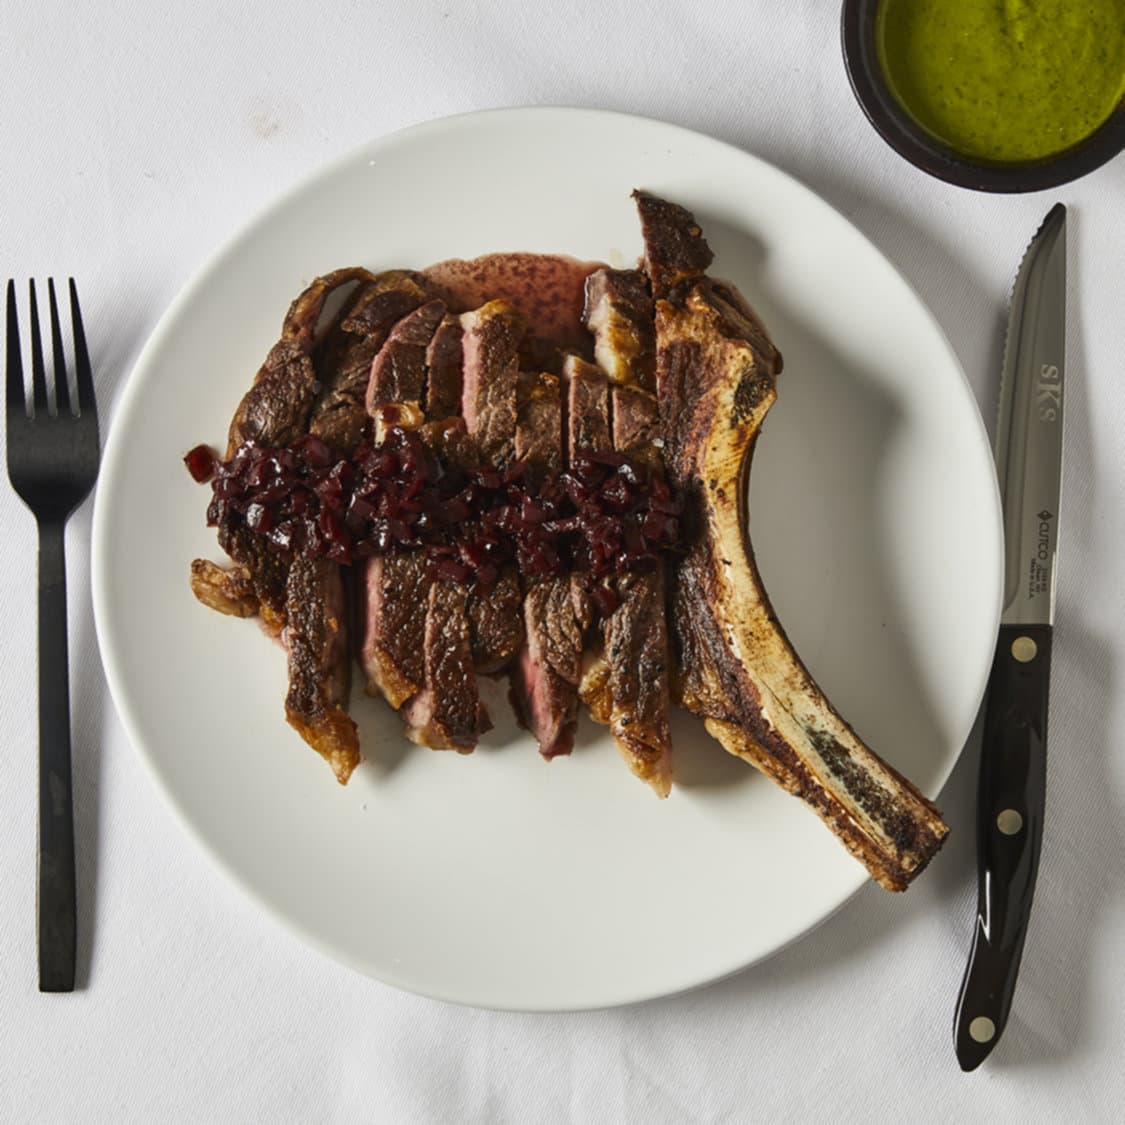 https://fleishigs.com/images/mobile-app/recipes/314-list-shallot-red-wine-steak-sauce.jpg